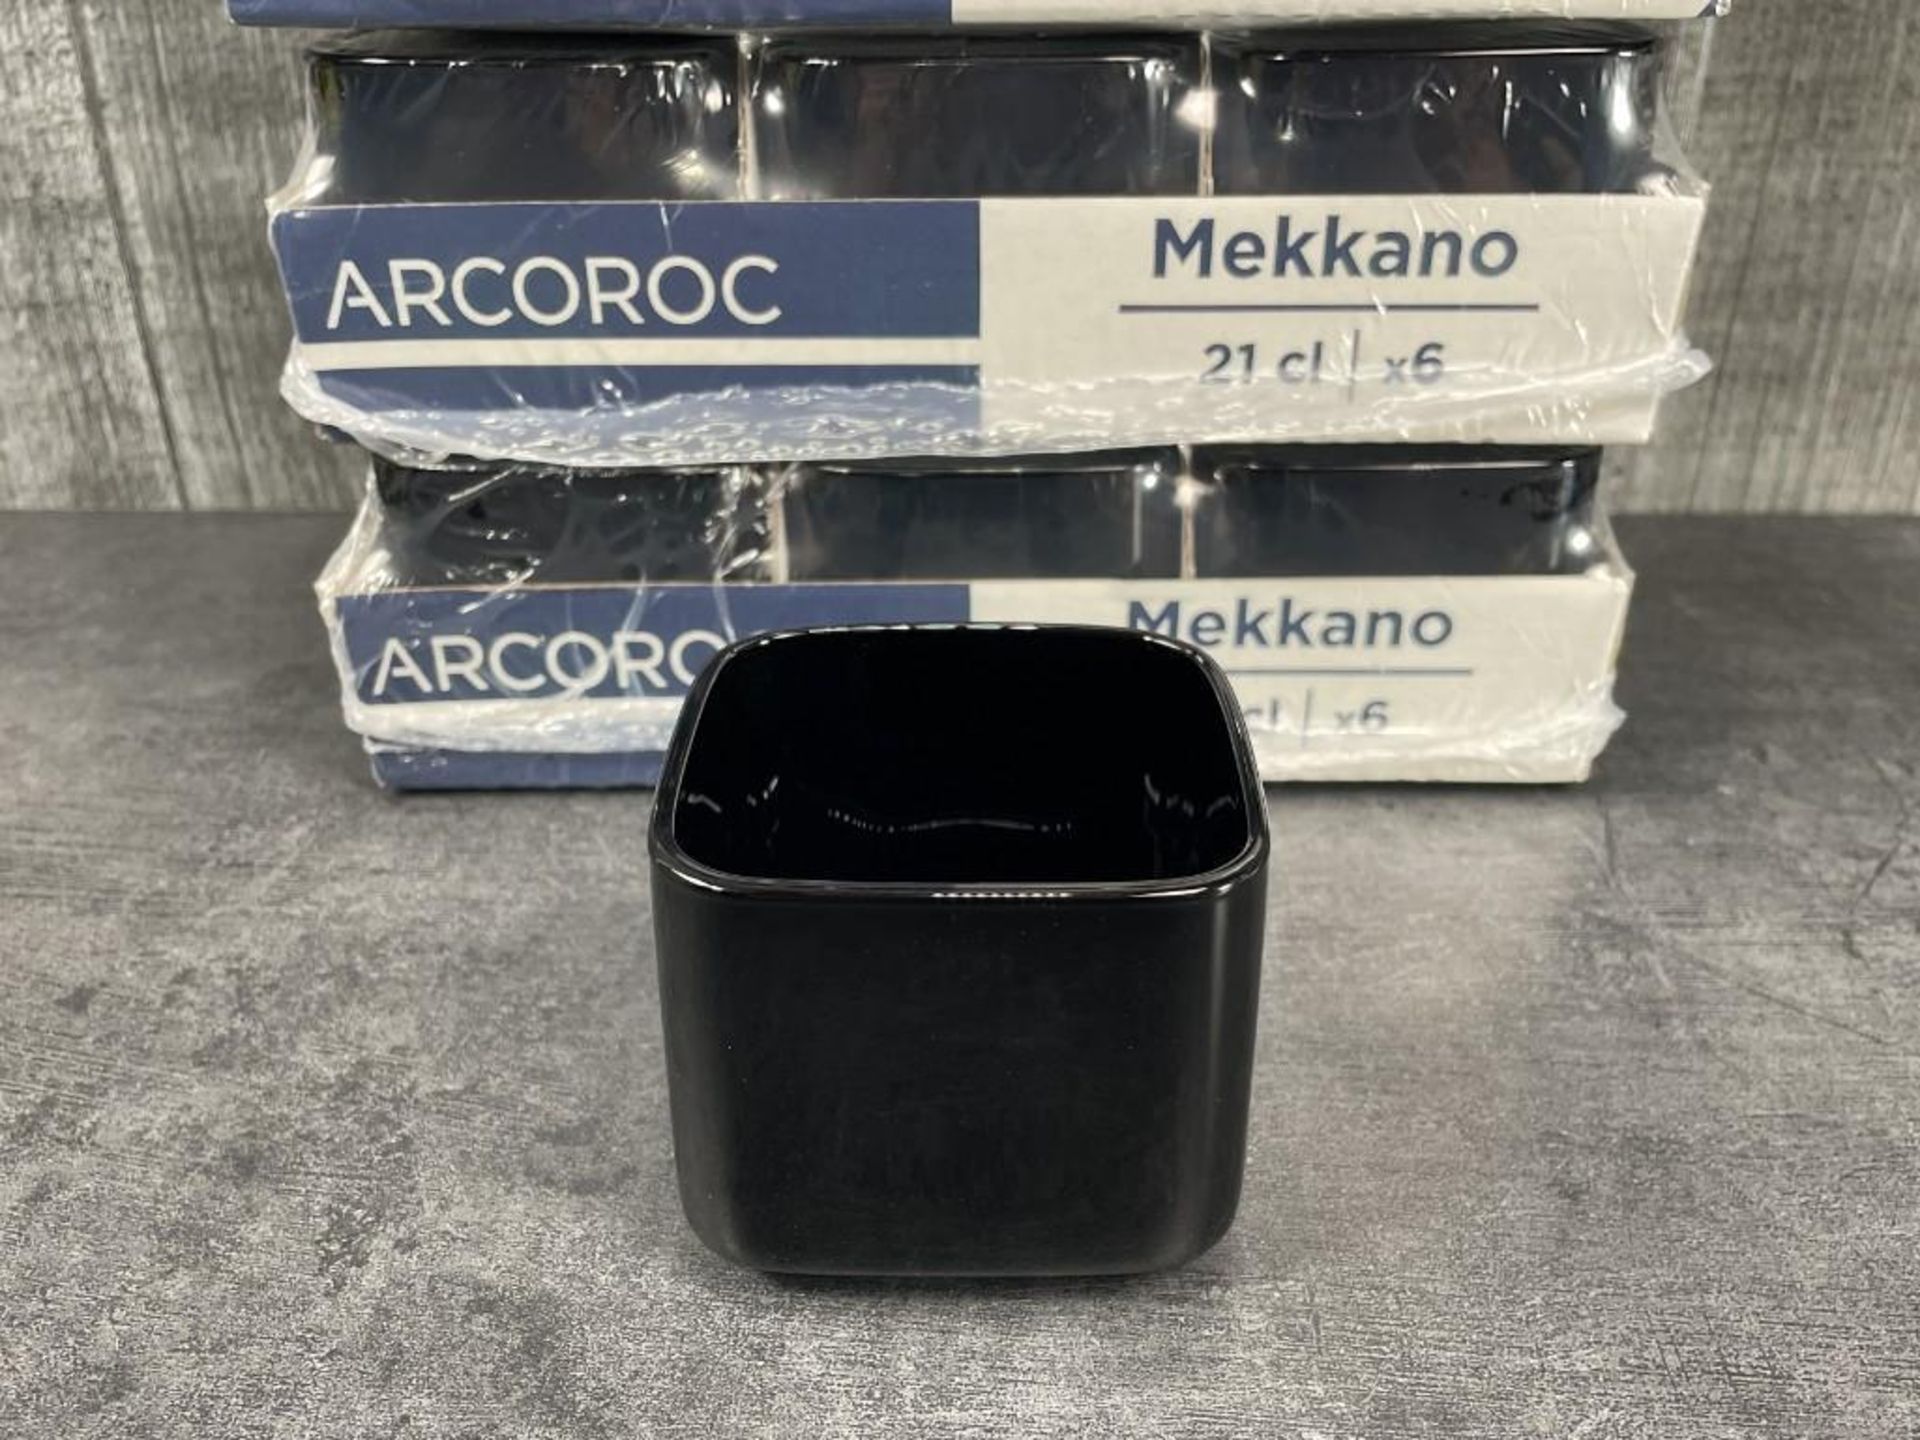 MEKKANO 2-7/8" BLACK SQUARE 7OZ BOWLS, ARCOROC N6652 - LOT OF 24 - Image 2 of 7